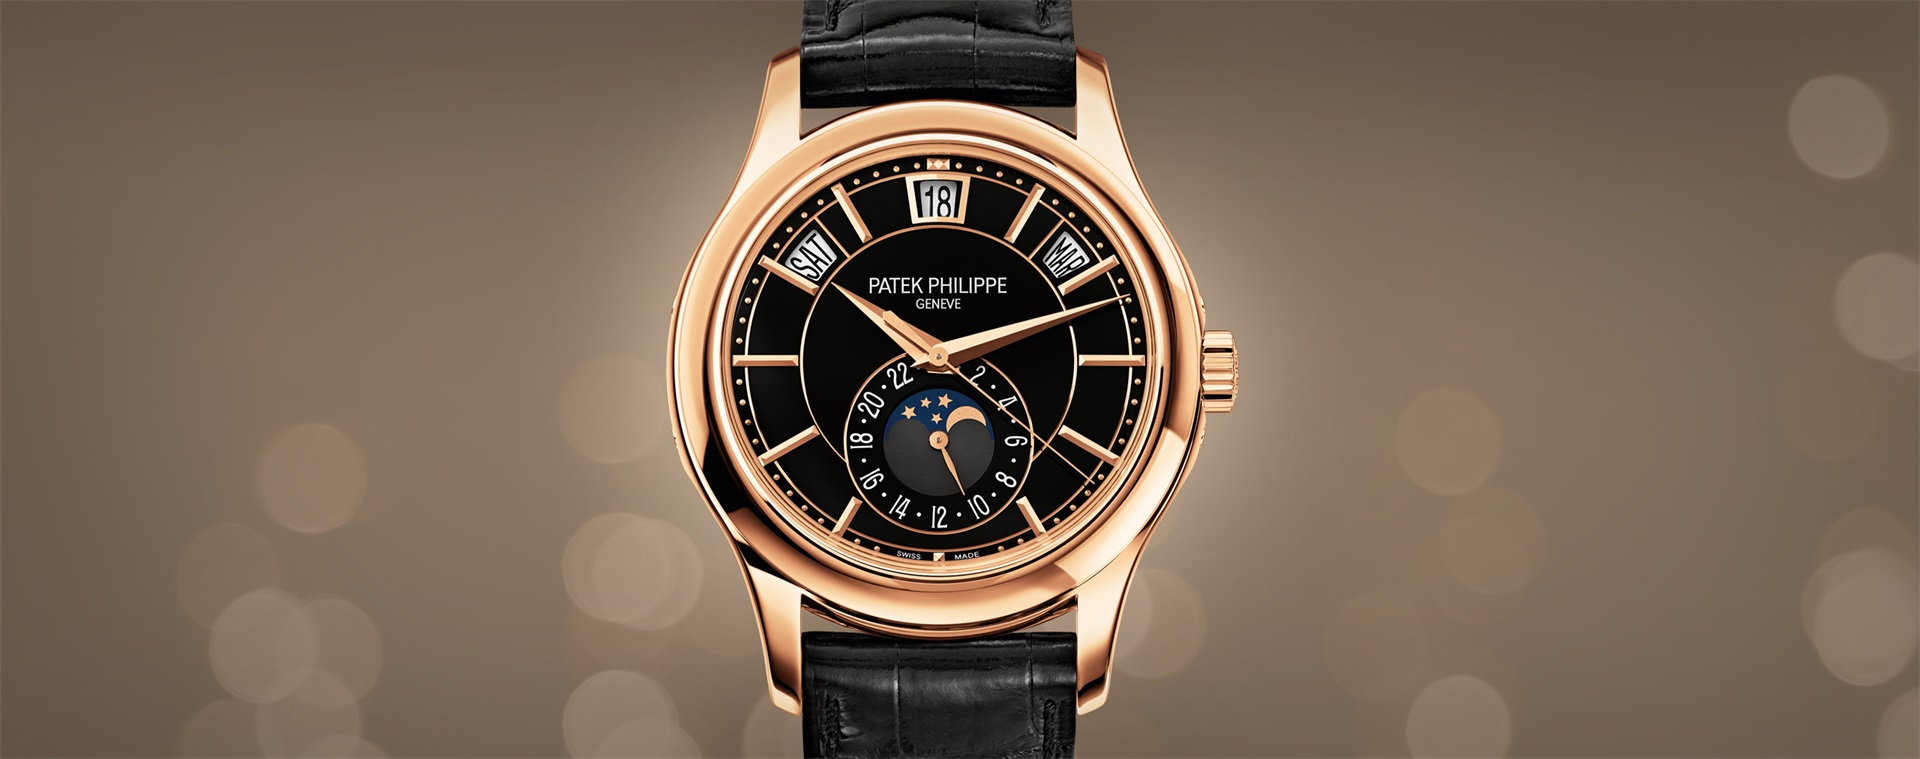 Patek Philippe White gold watch, diamonds. Mechanical movement.Patek Philippe カラトラバ